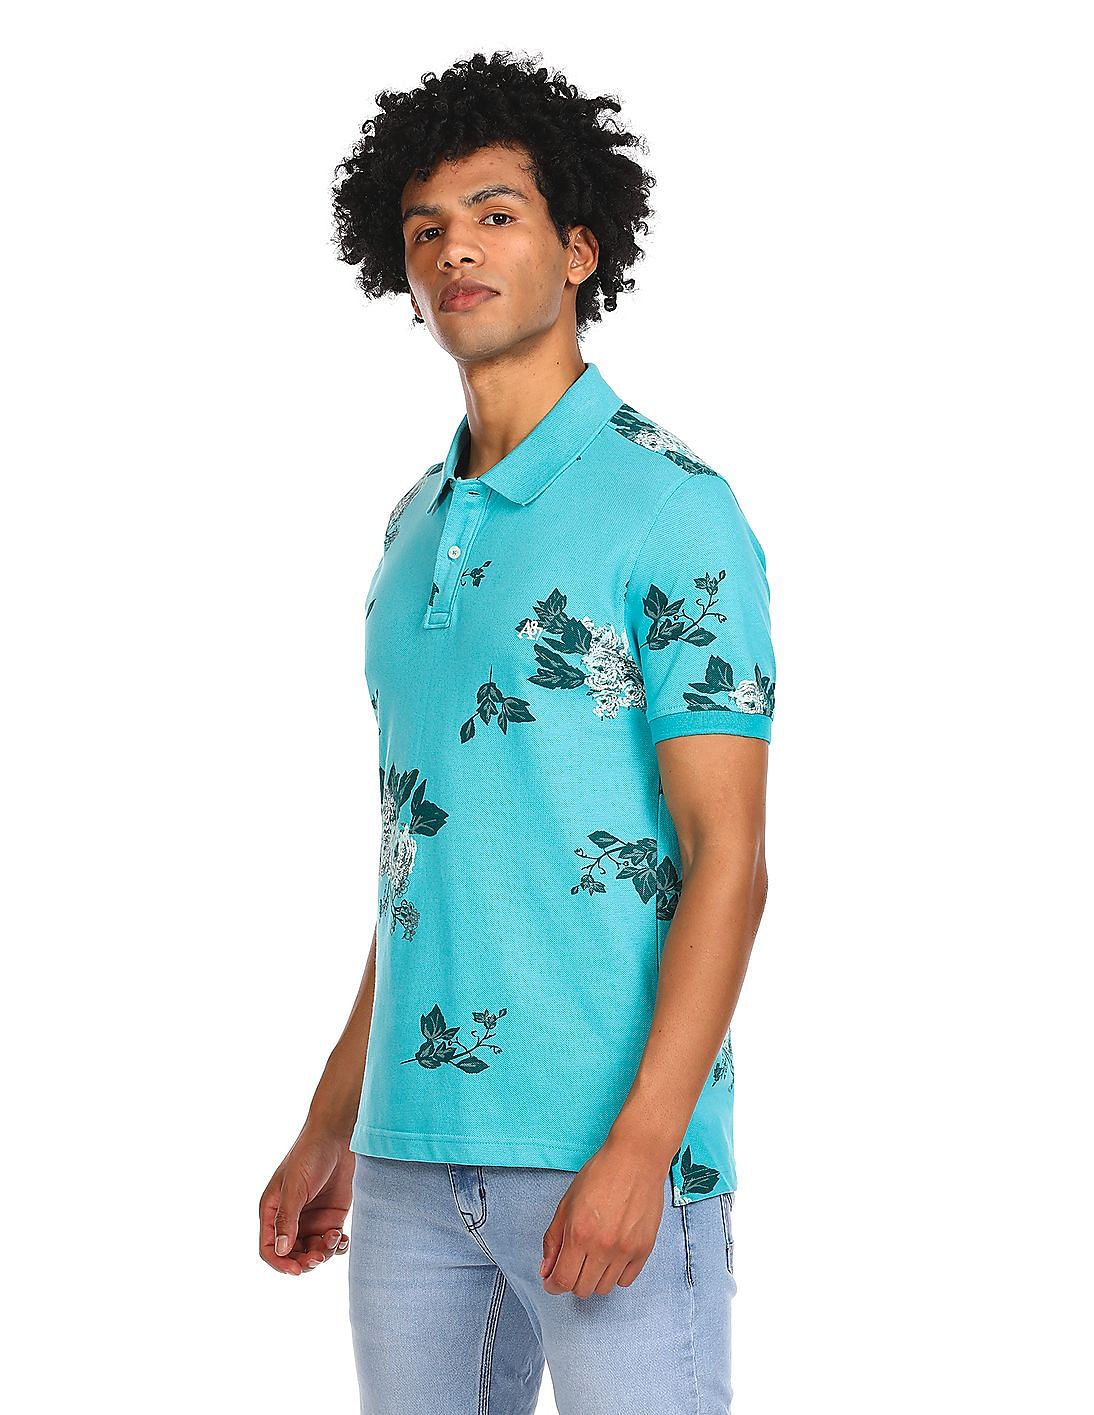 Aeropostale Men's Aero Original Brand V-Neck Graphic T Shirt L Cool  Turquoise : : Clothing, Shoes & Accessories